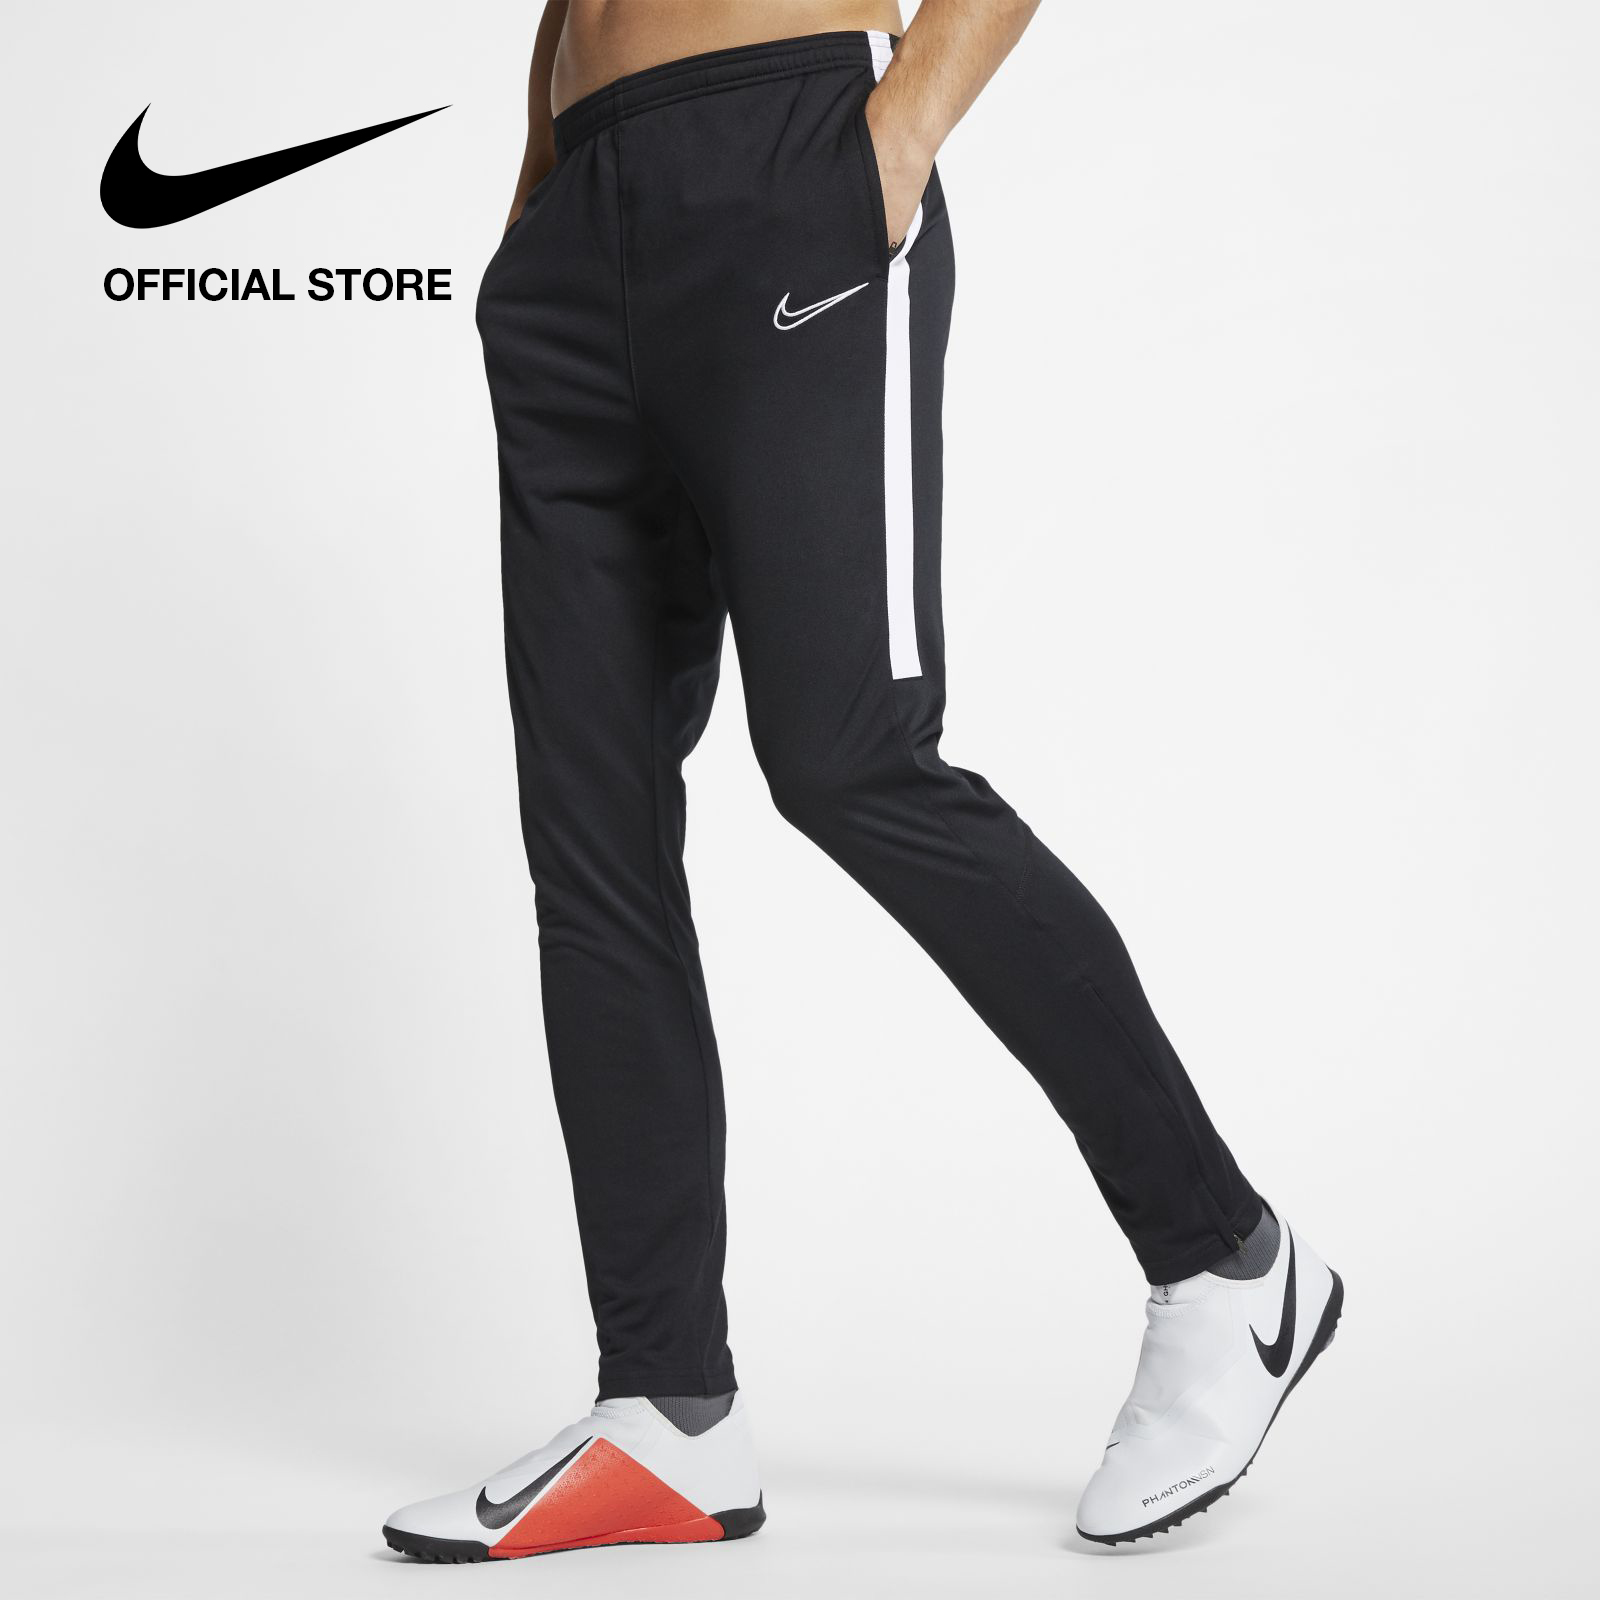 Buy Nike Pants Online | lazada.sg